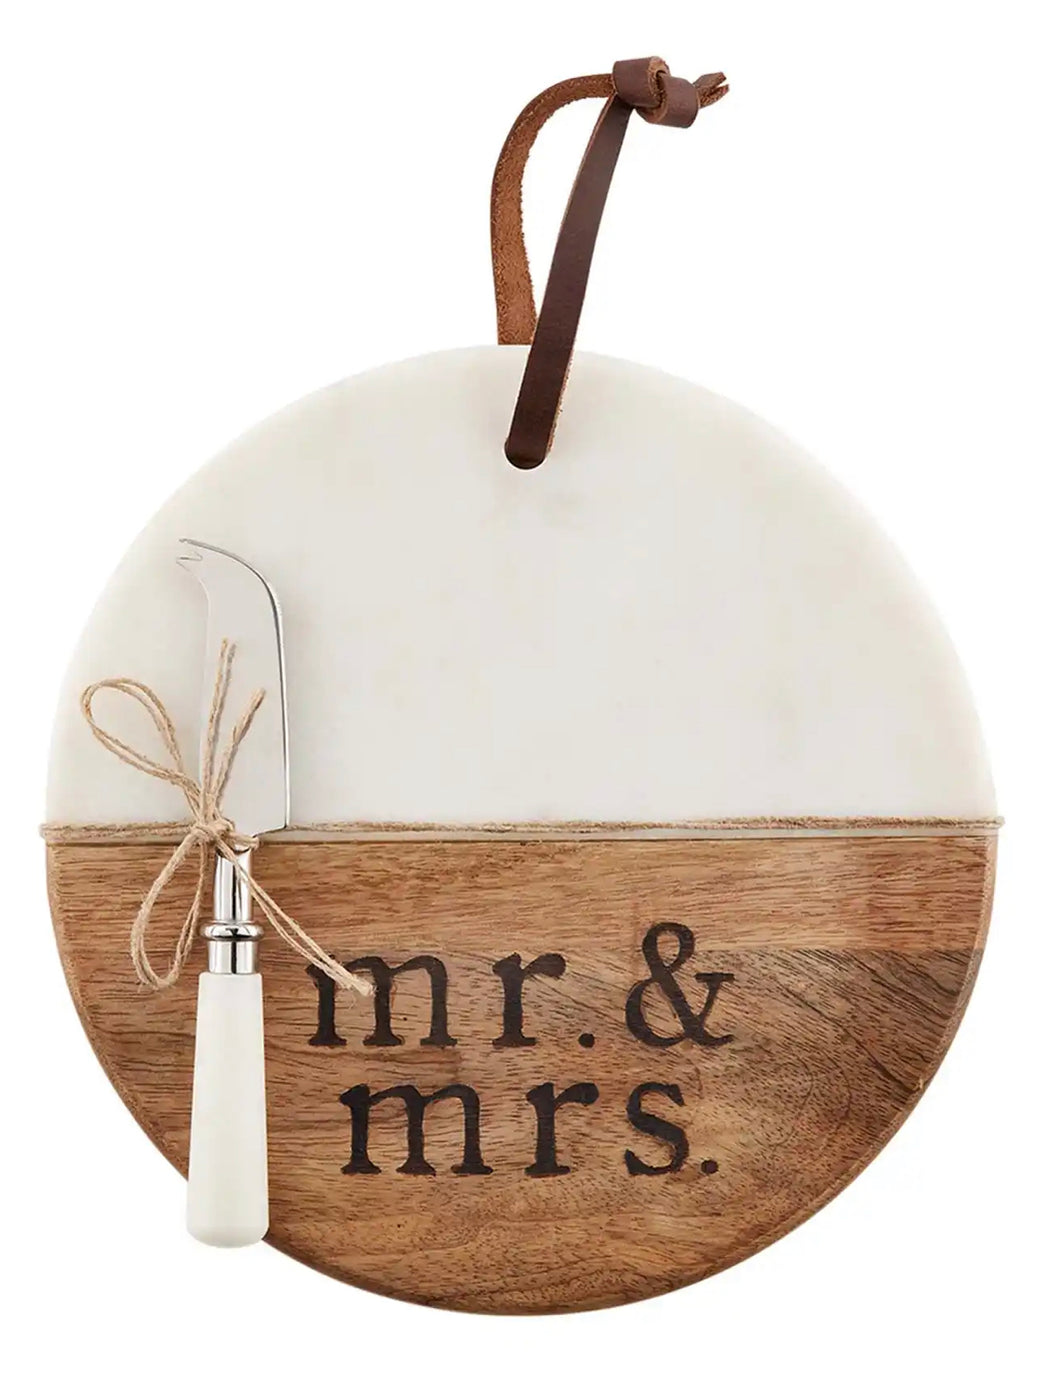 Mr & Mrs Board Set